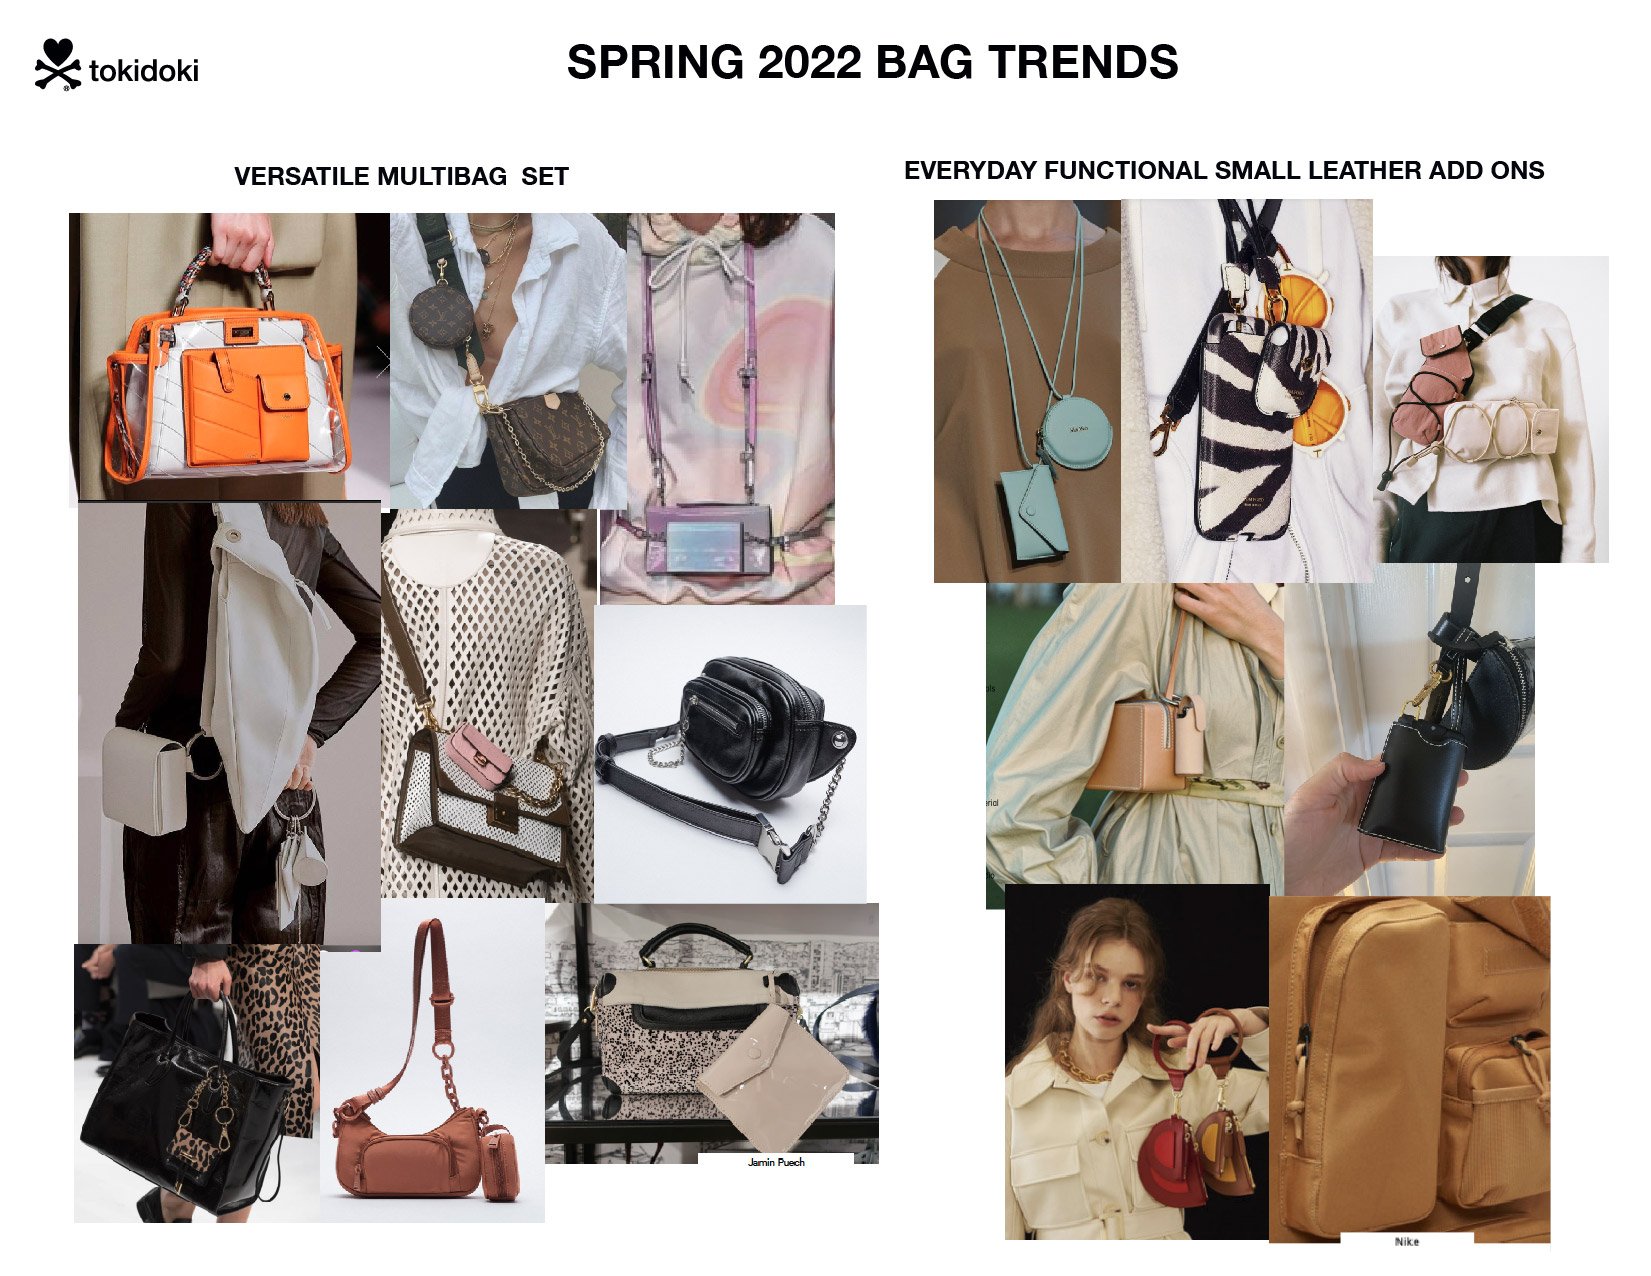 SS 22 Bag Trends-01.jpg